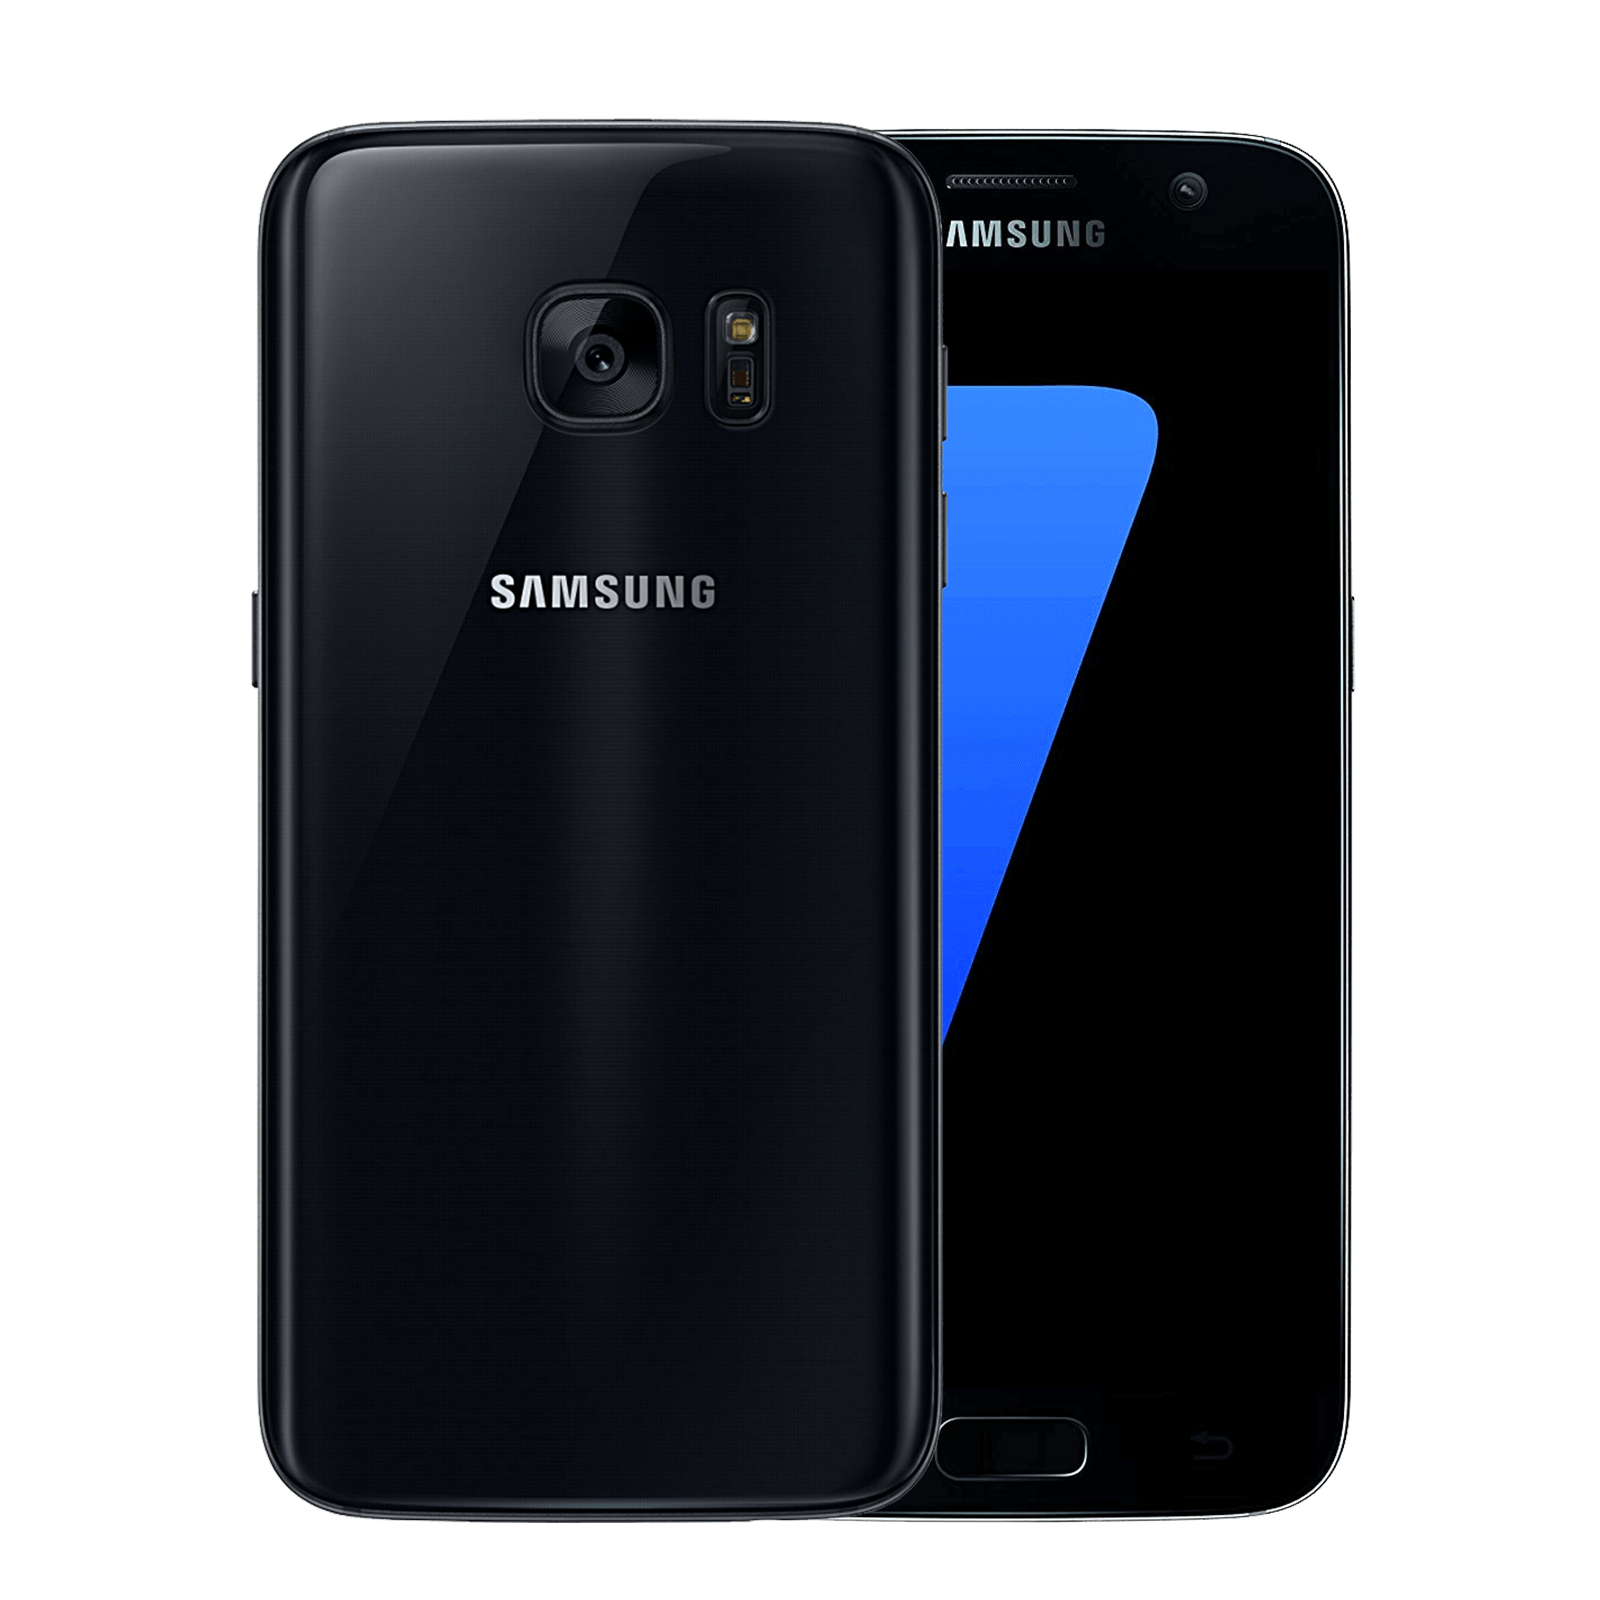 Samsung Galaxy S7 32GB Black G930F Pristine - Unlocked